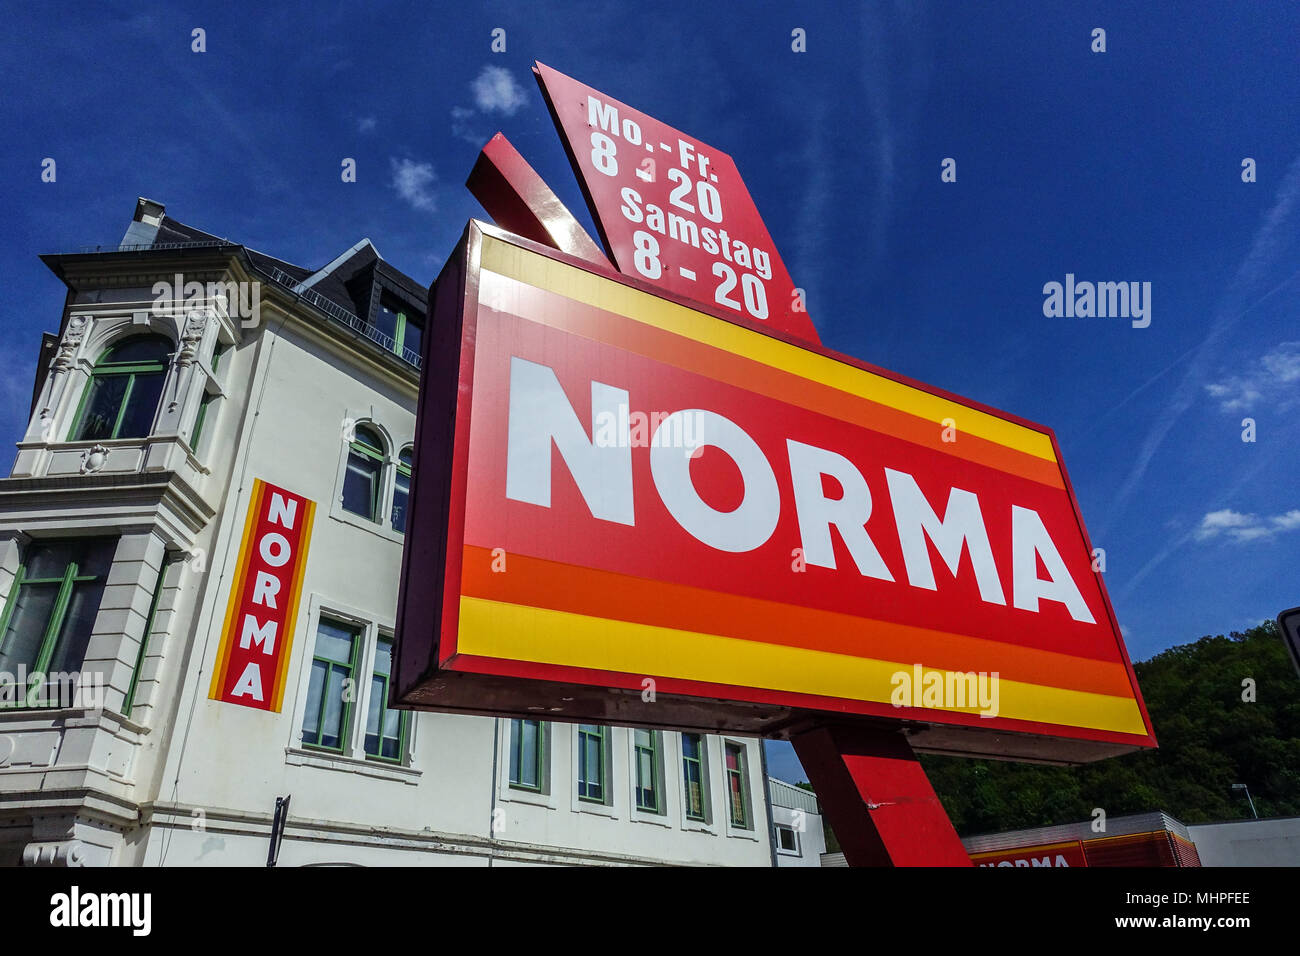 Norma logo, sign, supermarket Stock Photo